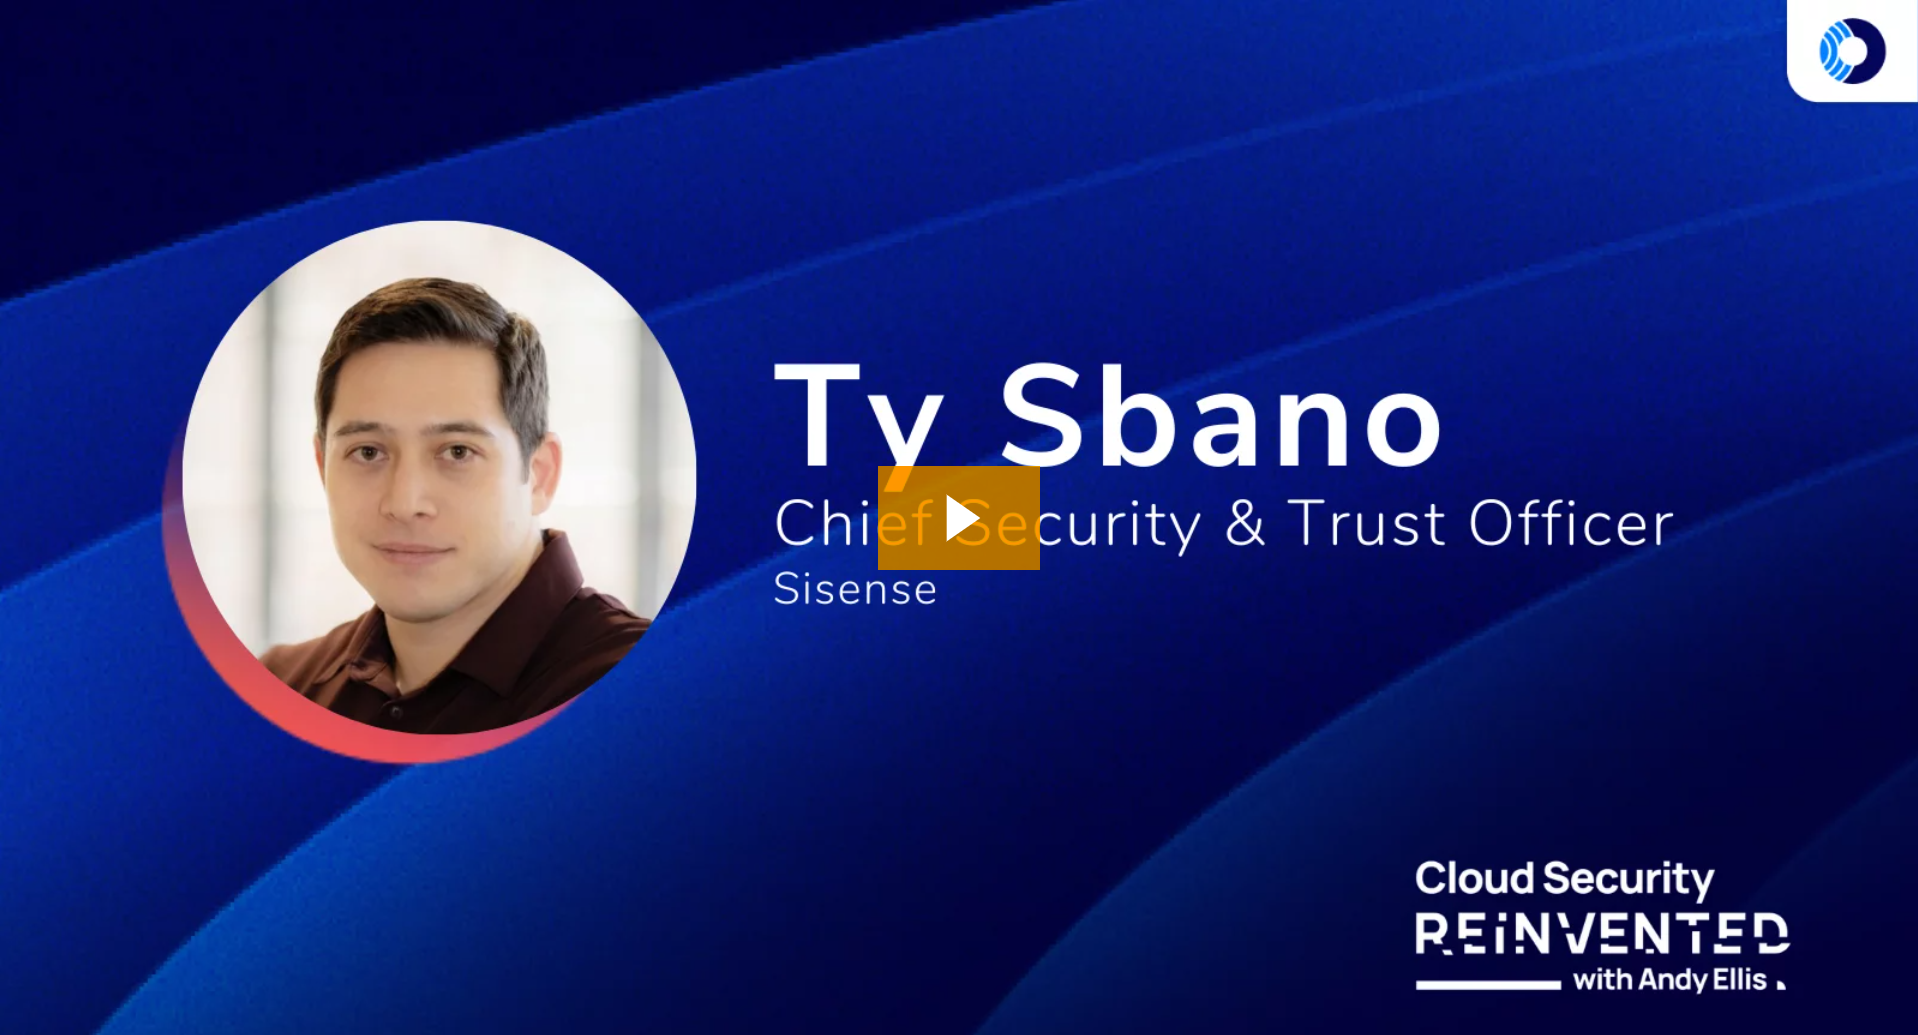 Cloud Security Reinvented: Ty Sbano